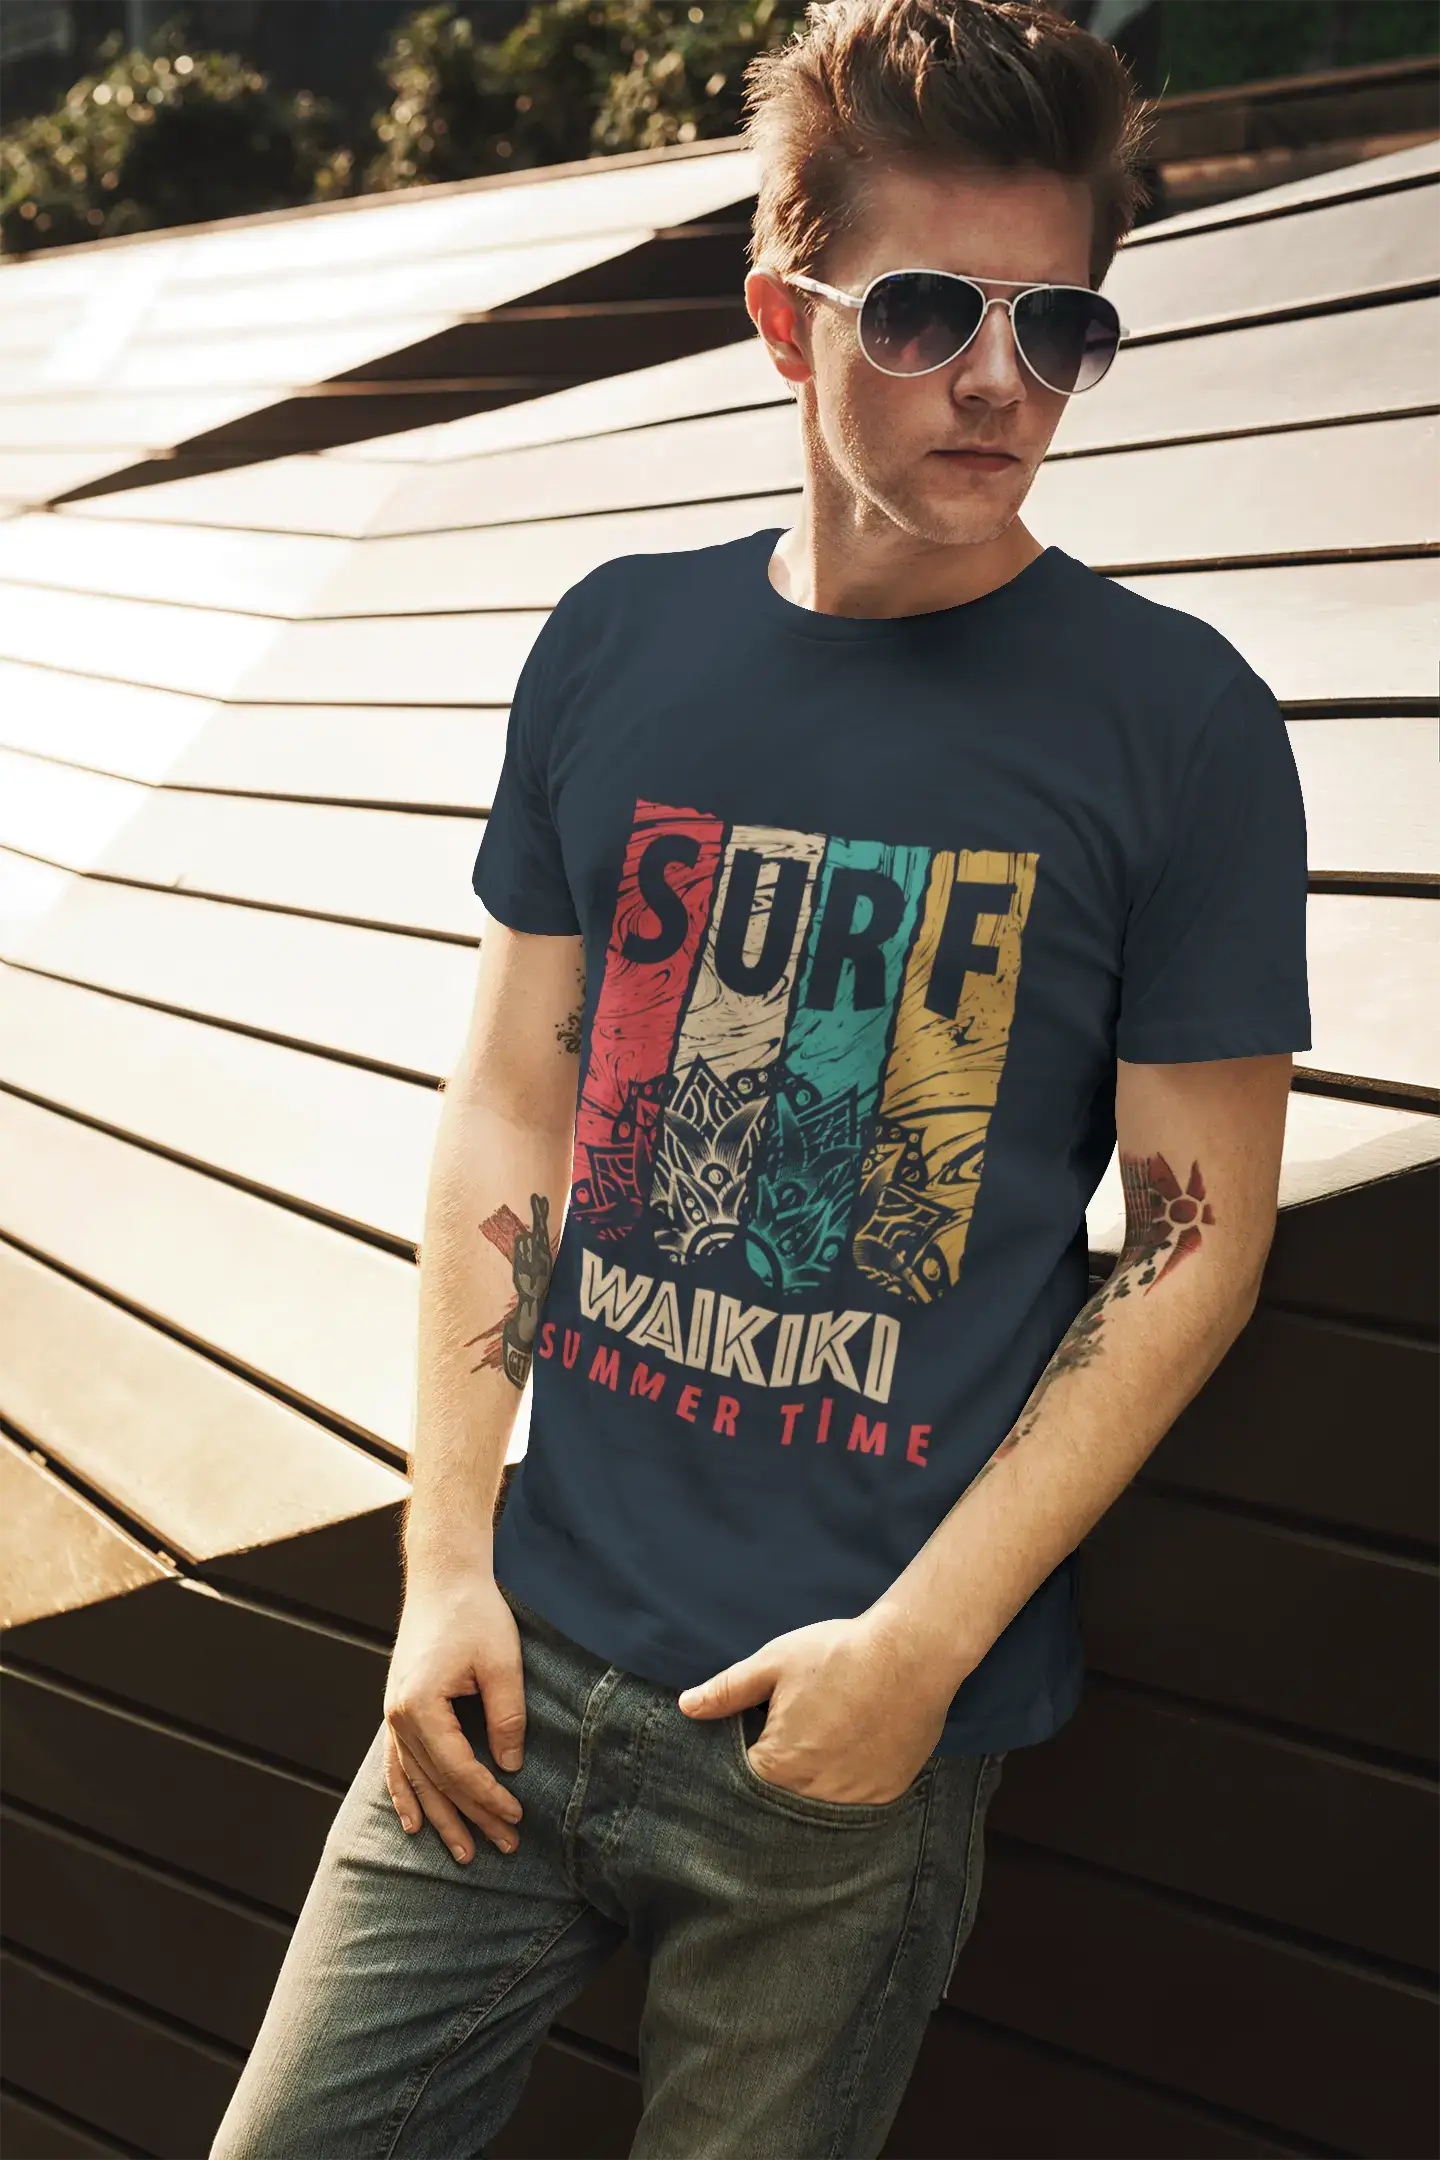 Men's Graphic T-Shirt Surf Summer Time WAIKIKI Navy